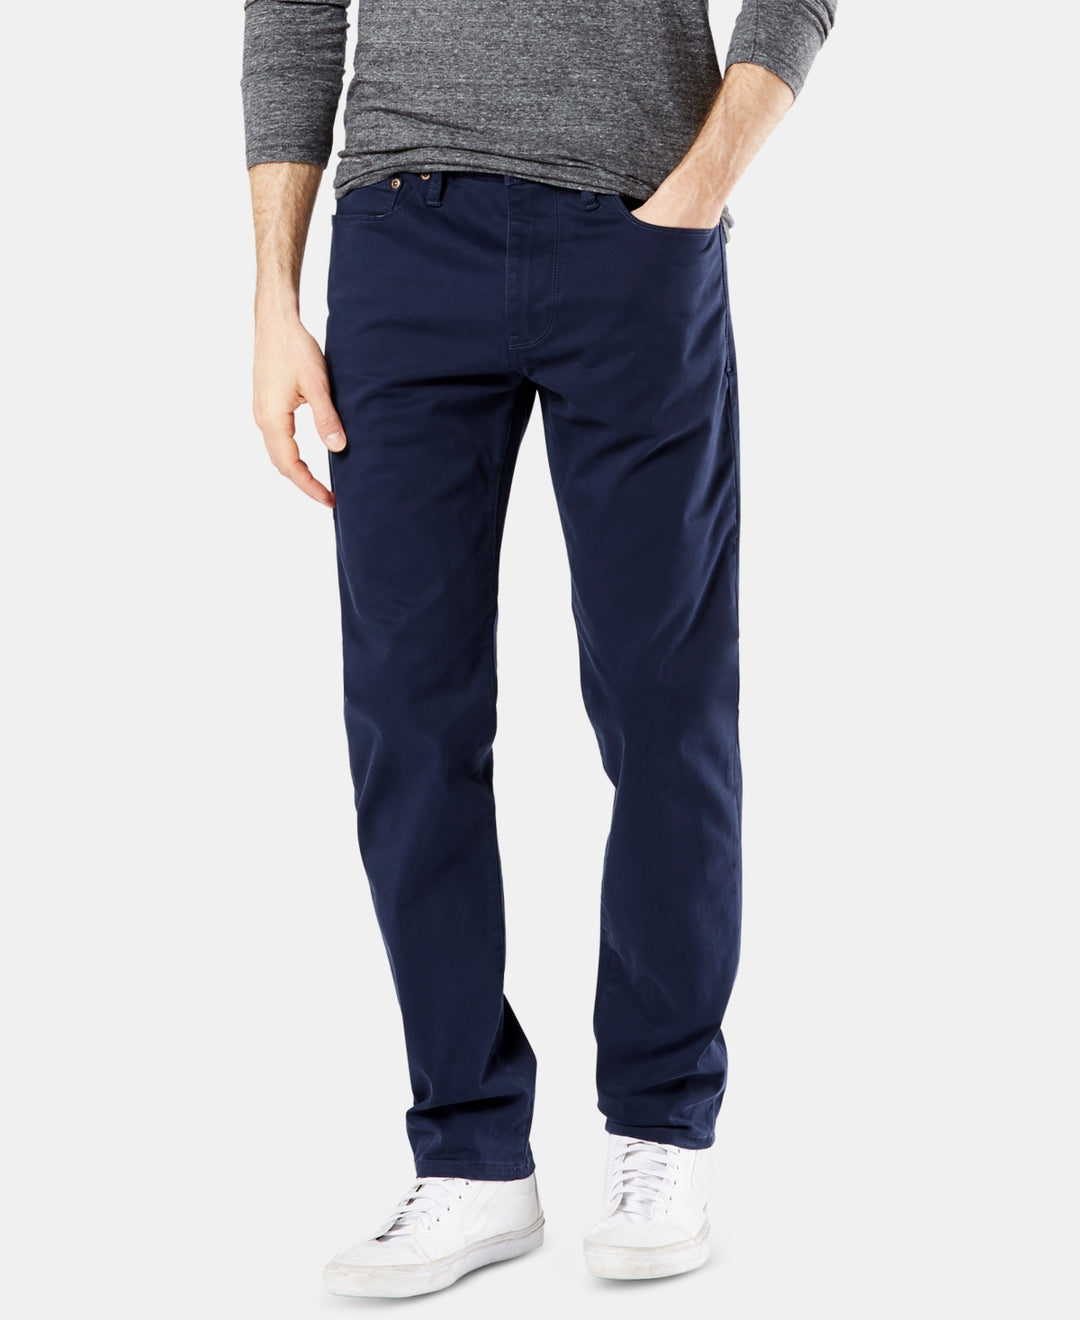 Dockers Men's Slim Fit Jean Cut Pants Blue Size 36X34